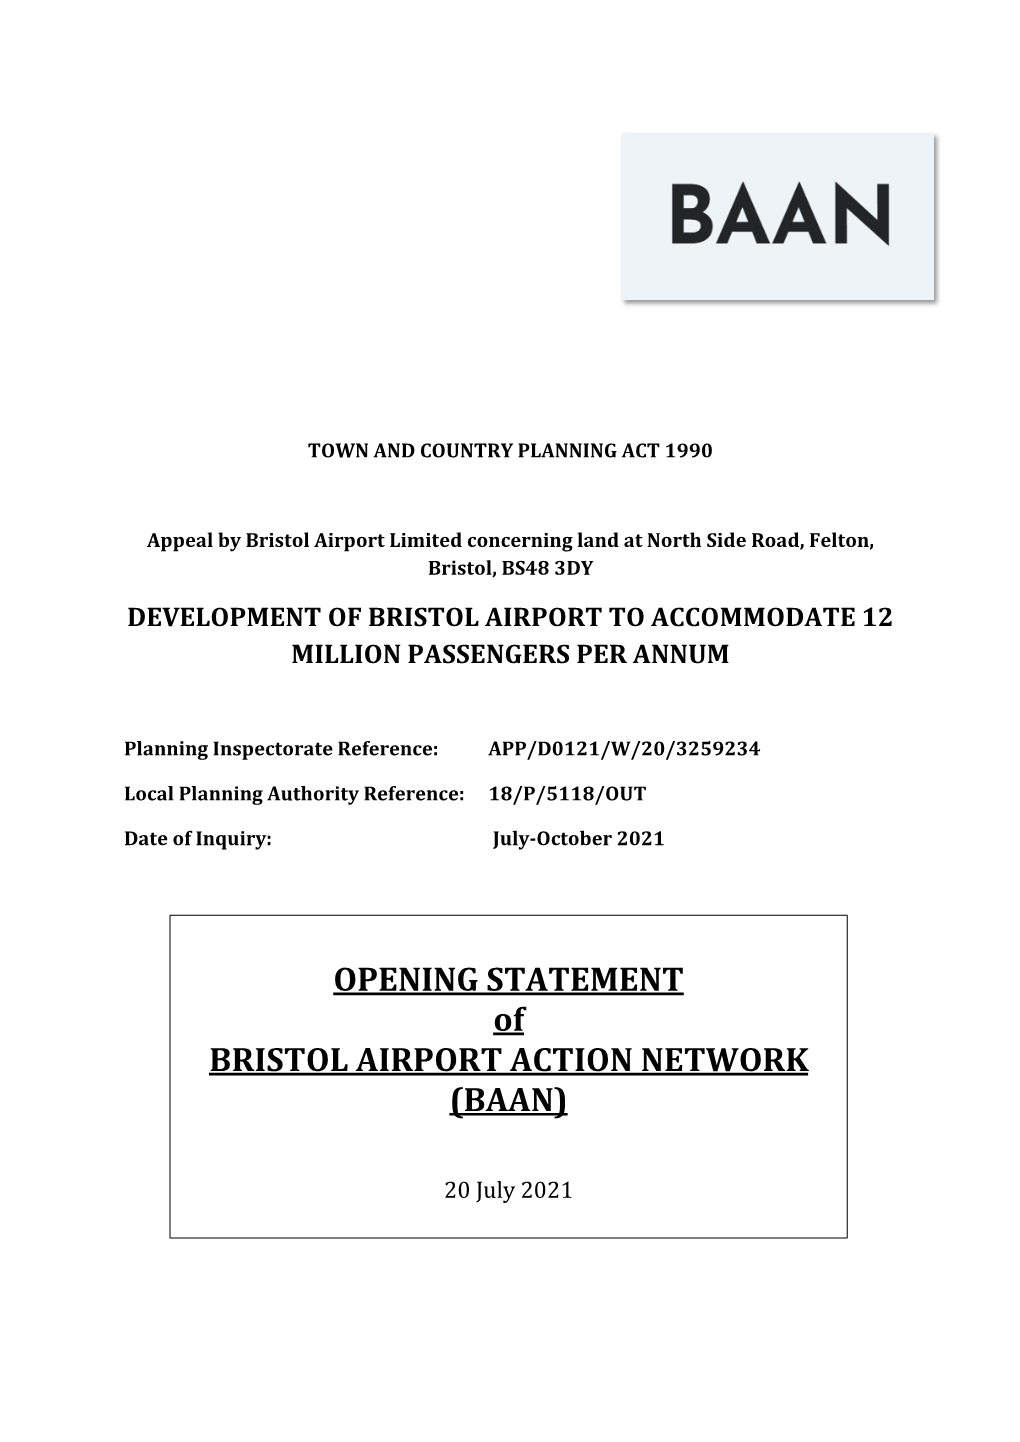 OPENING STATEMENT of BRISTOL AIRPORT ACTION NETWORK (BAAN)